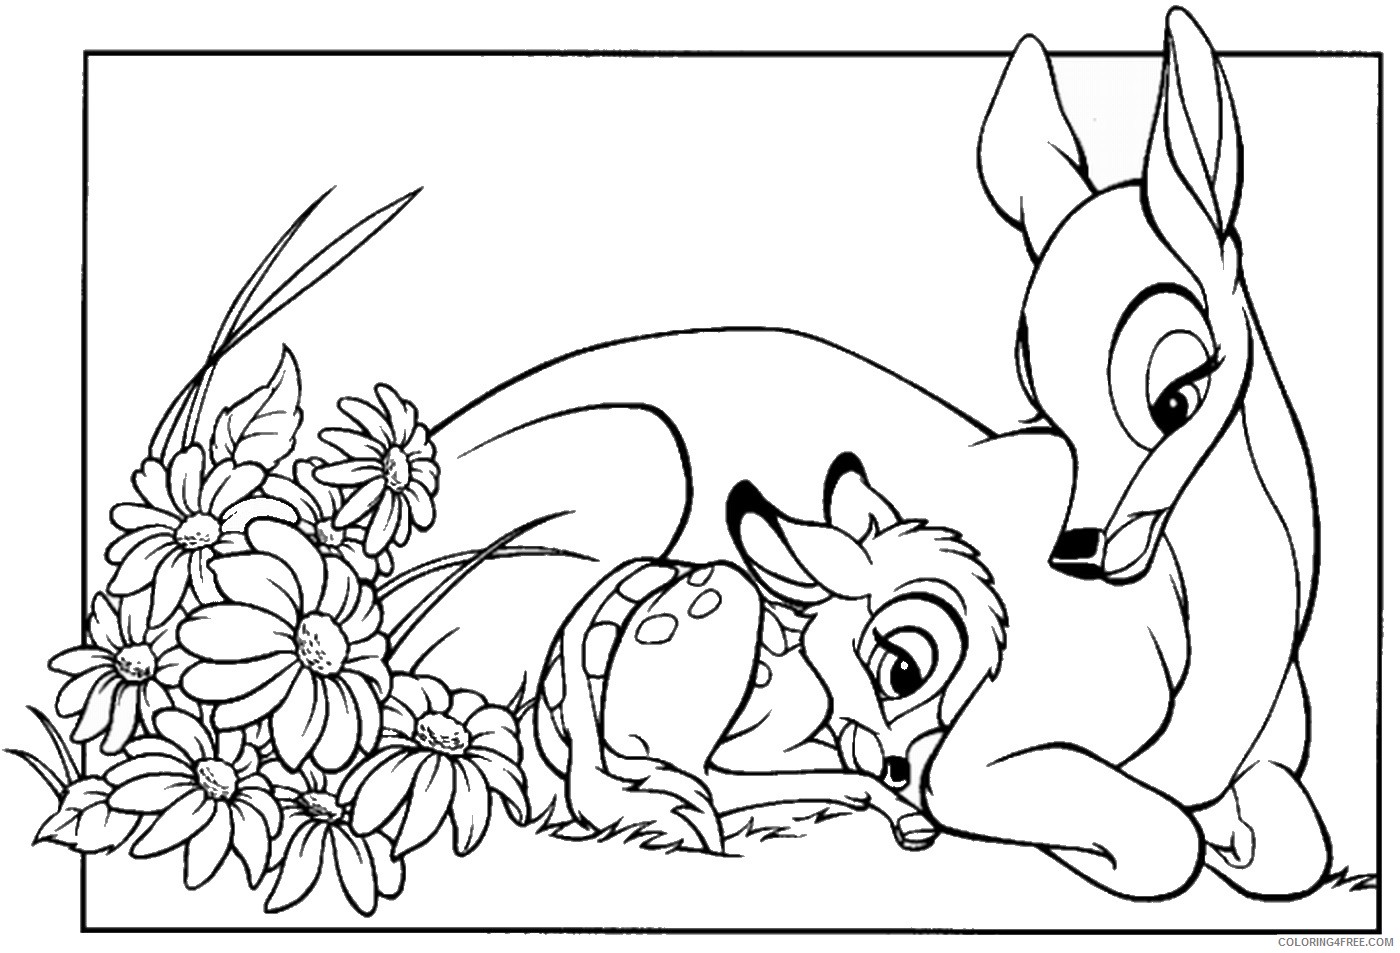 Bambi Coloring Pages Cartoons bambic3 Printable 2020 0982 Coloring4free